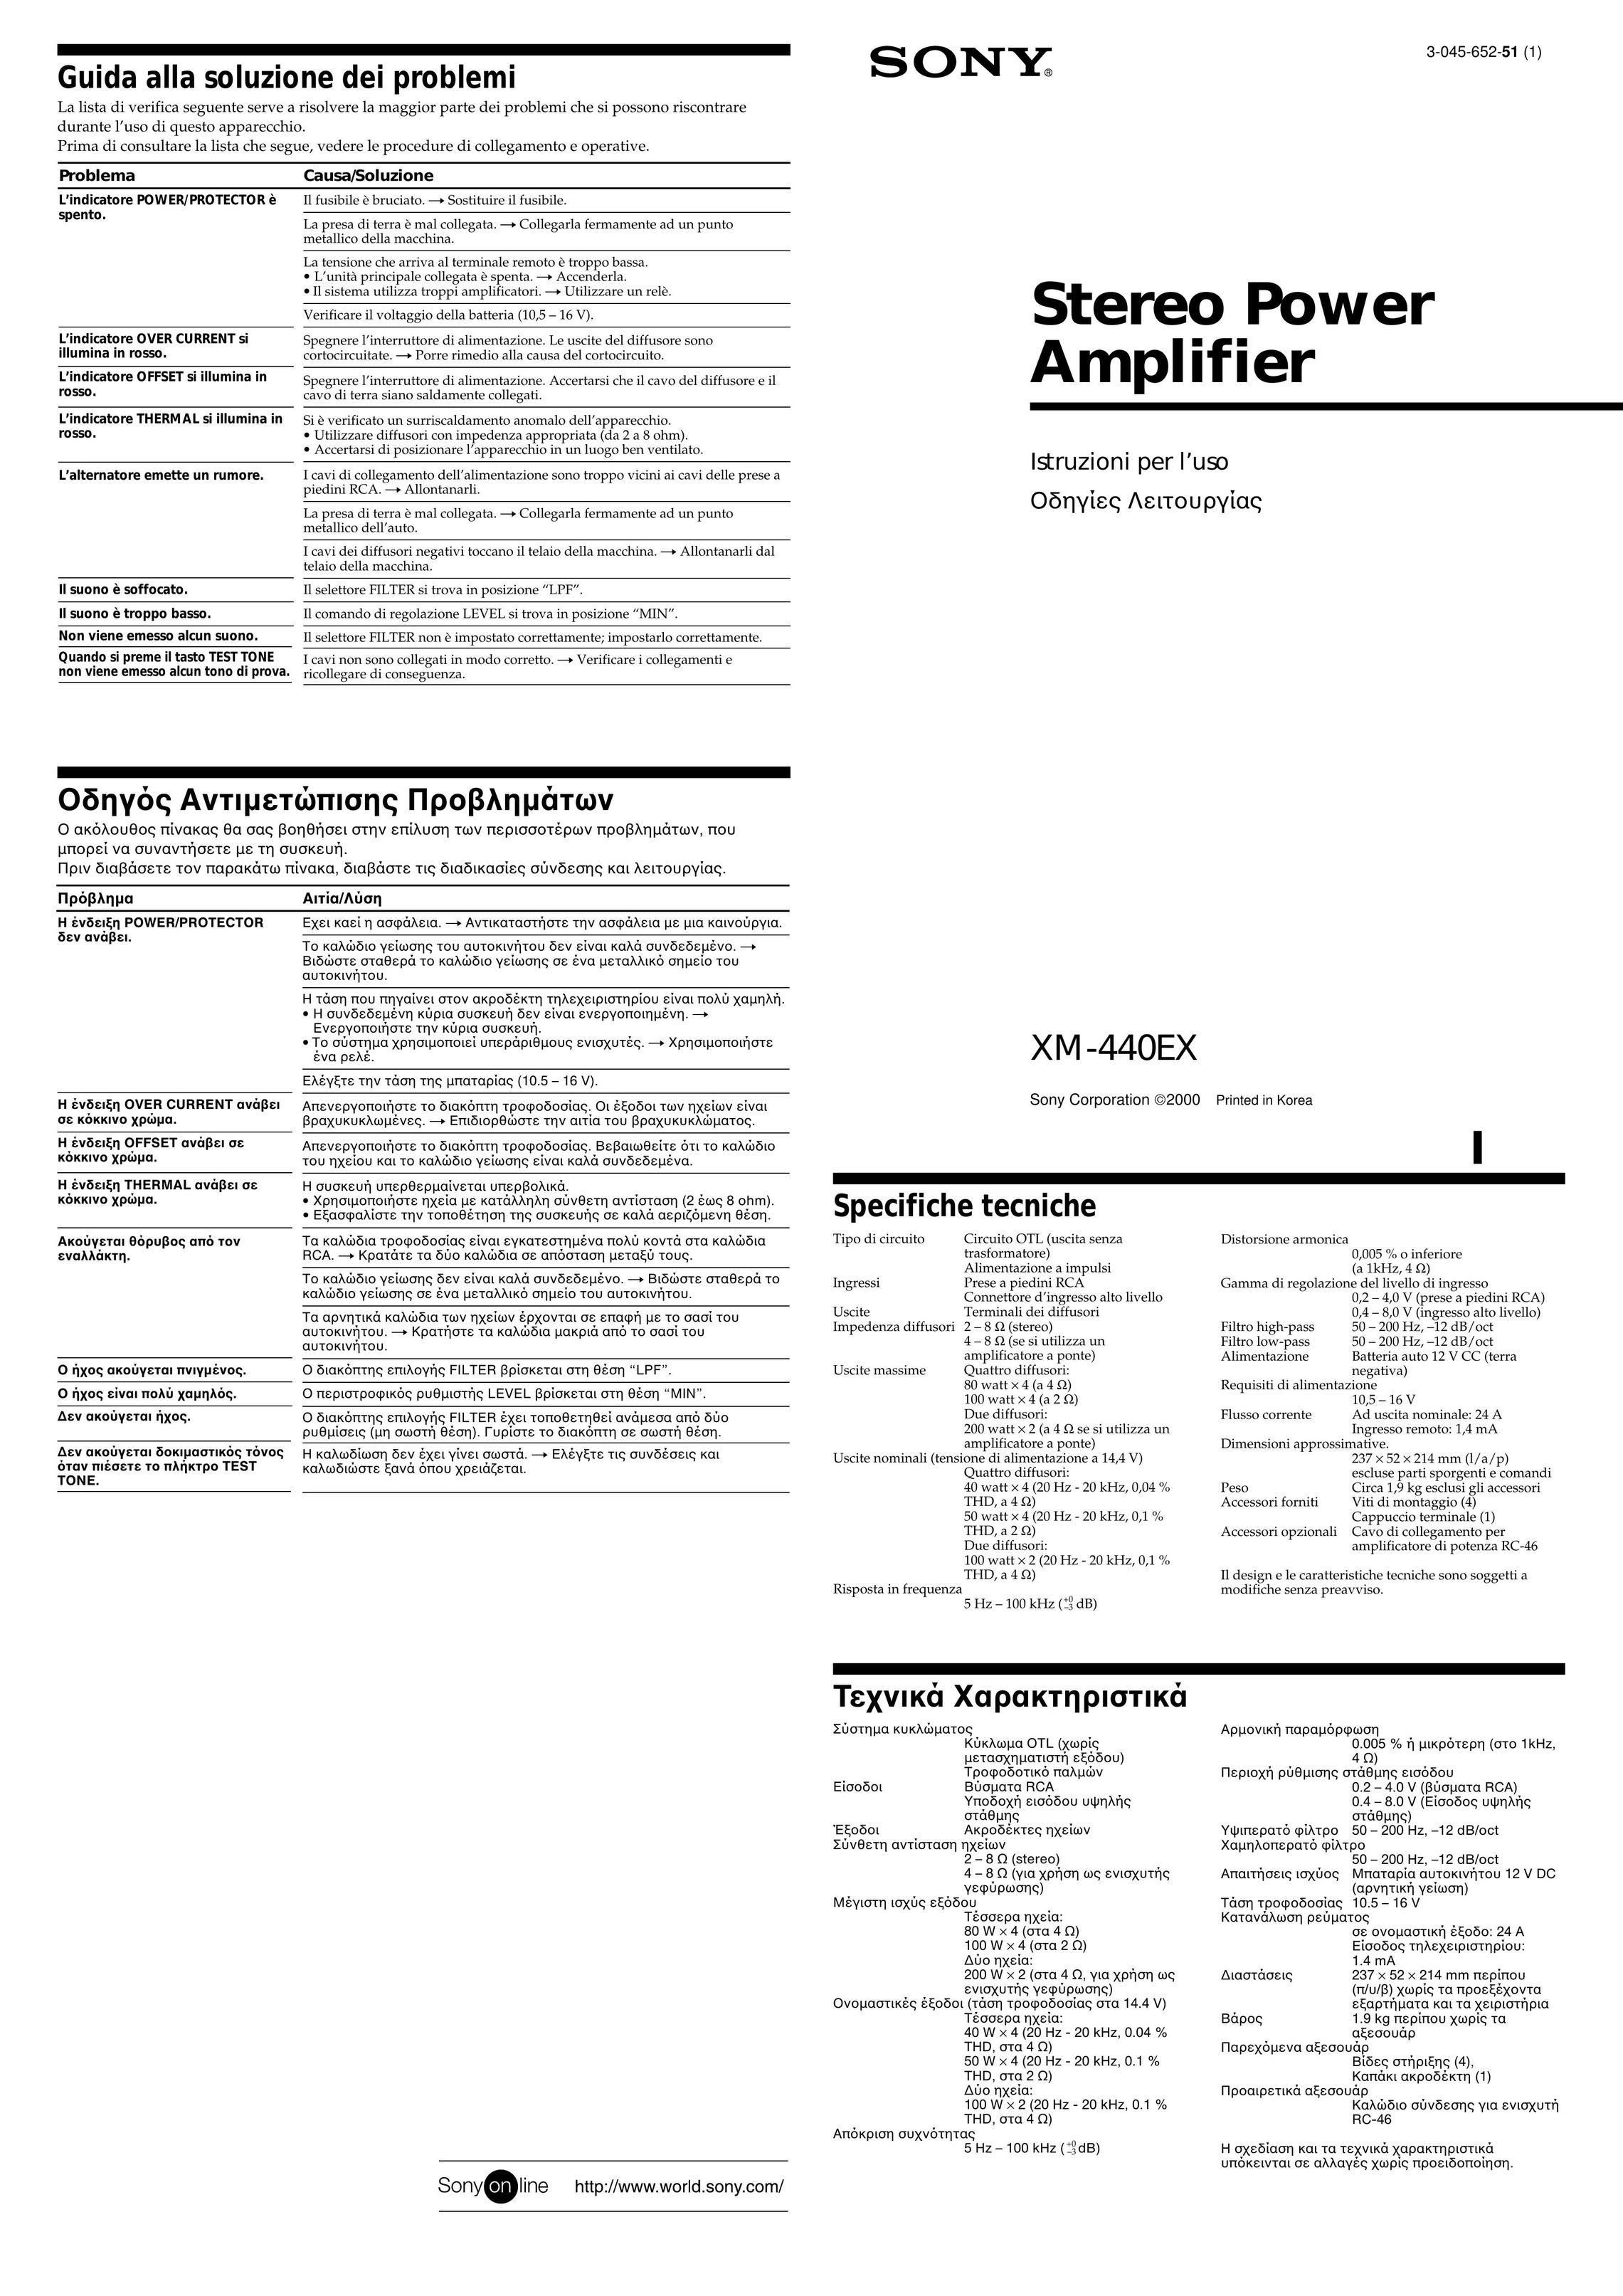 Sony 645-057/090 Stereo Amplifier User Manual